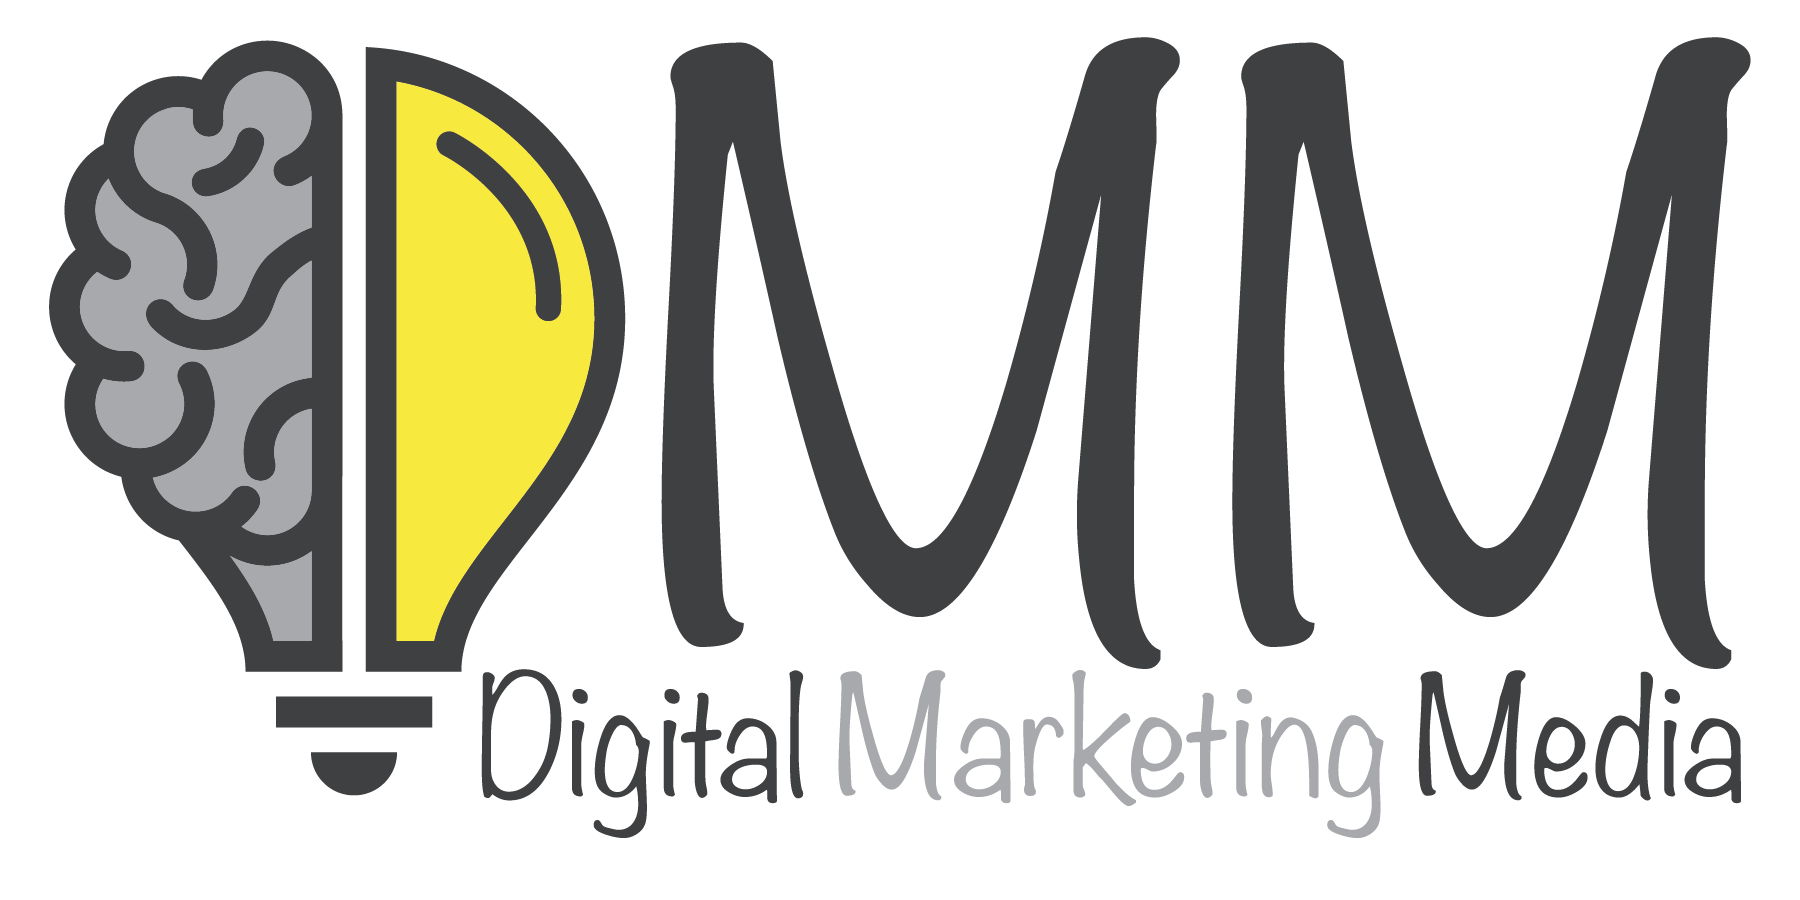 The Digital Marketing Media